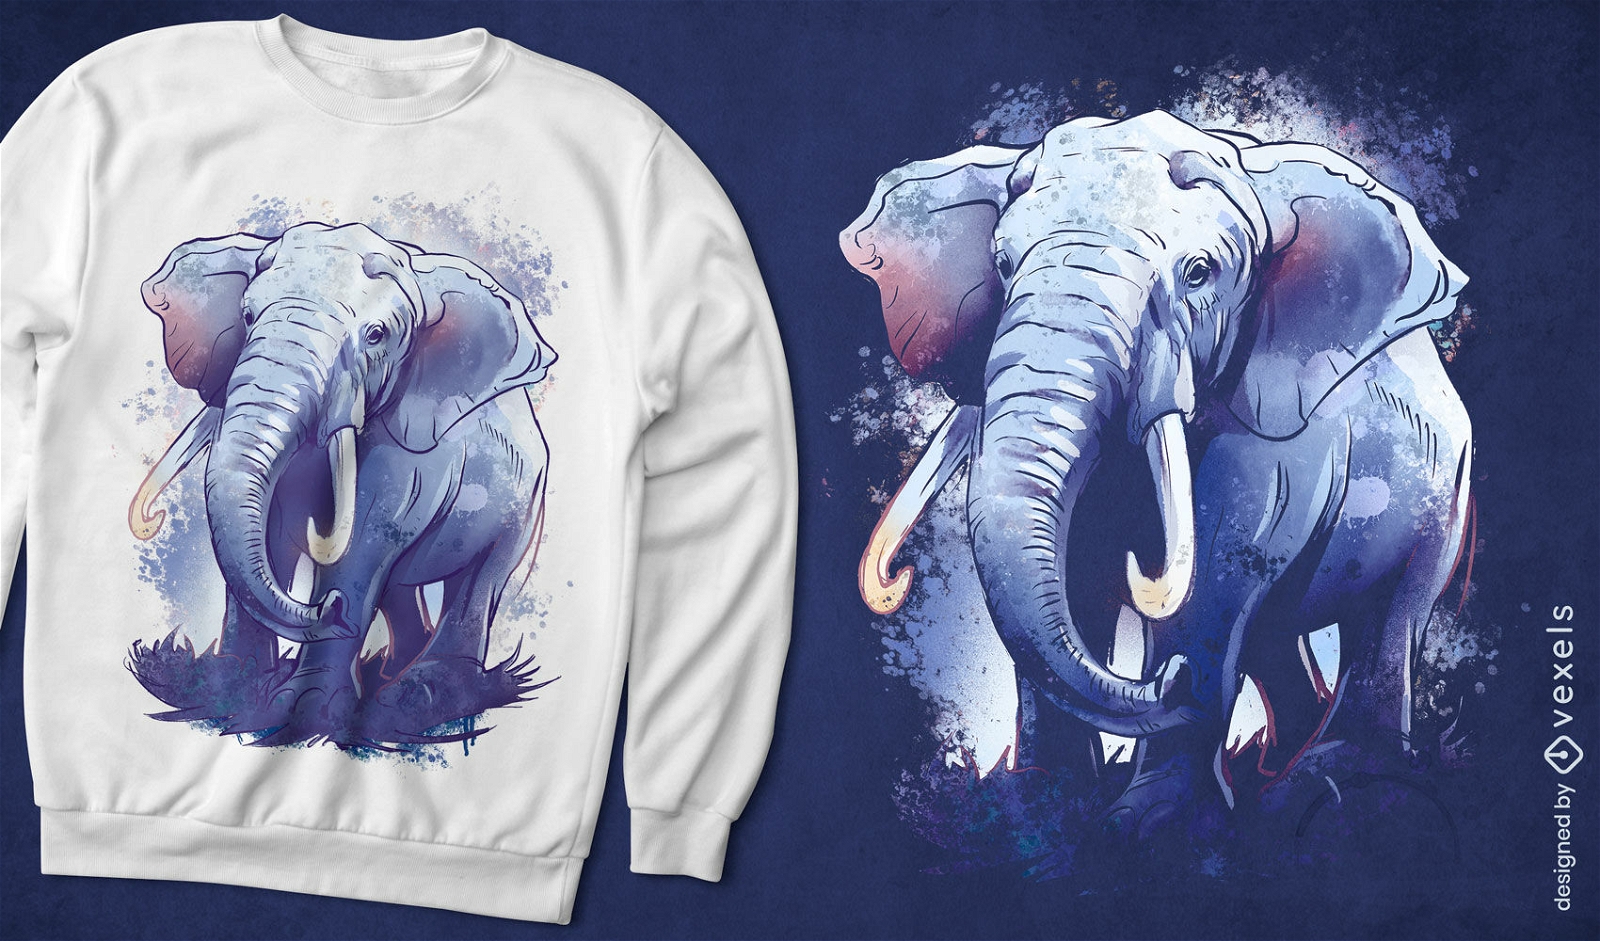 Dise?o de camiseta de animal salvaje elefante.